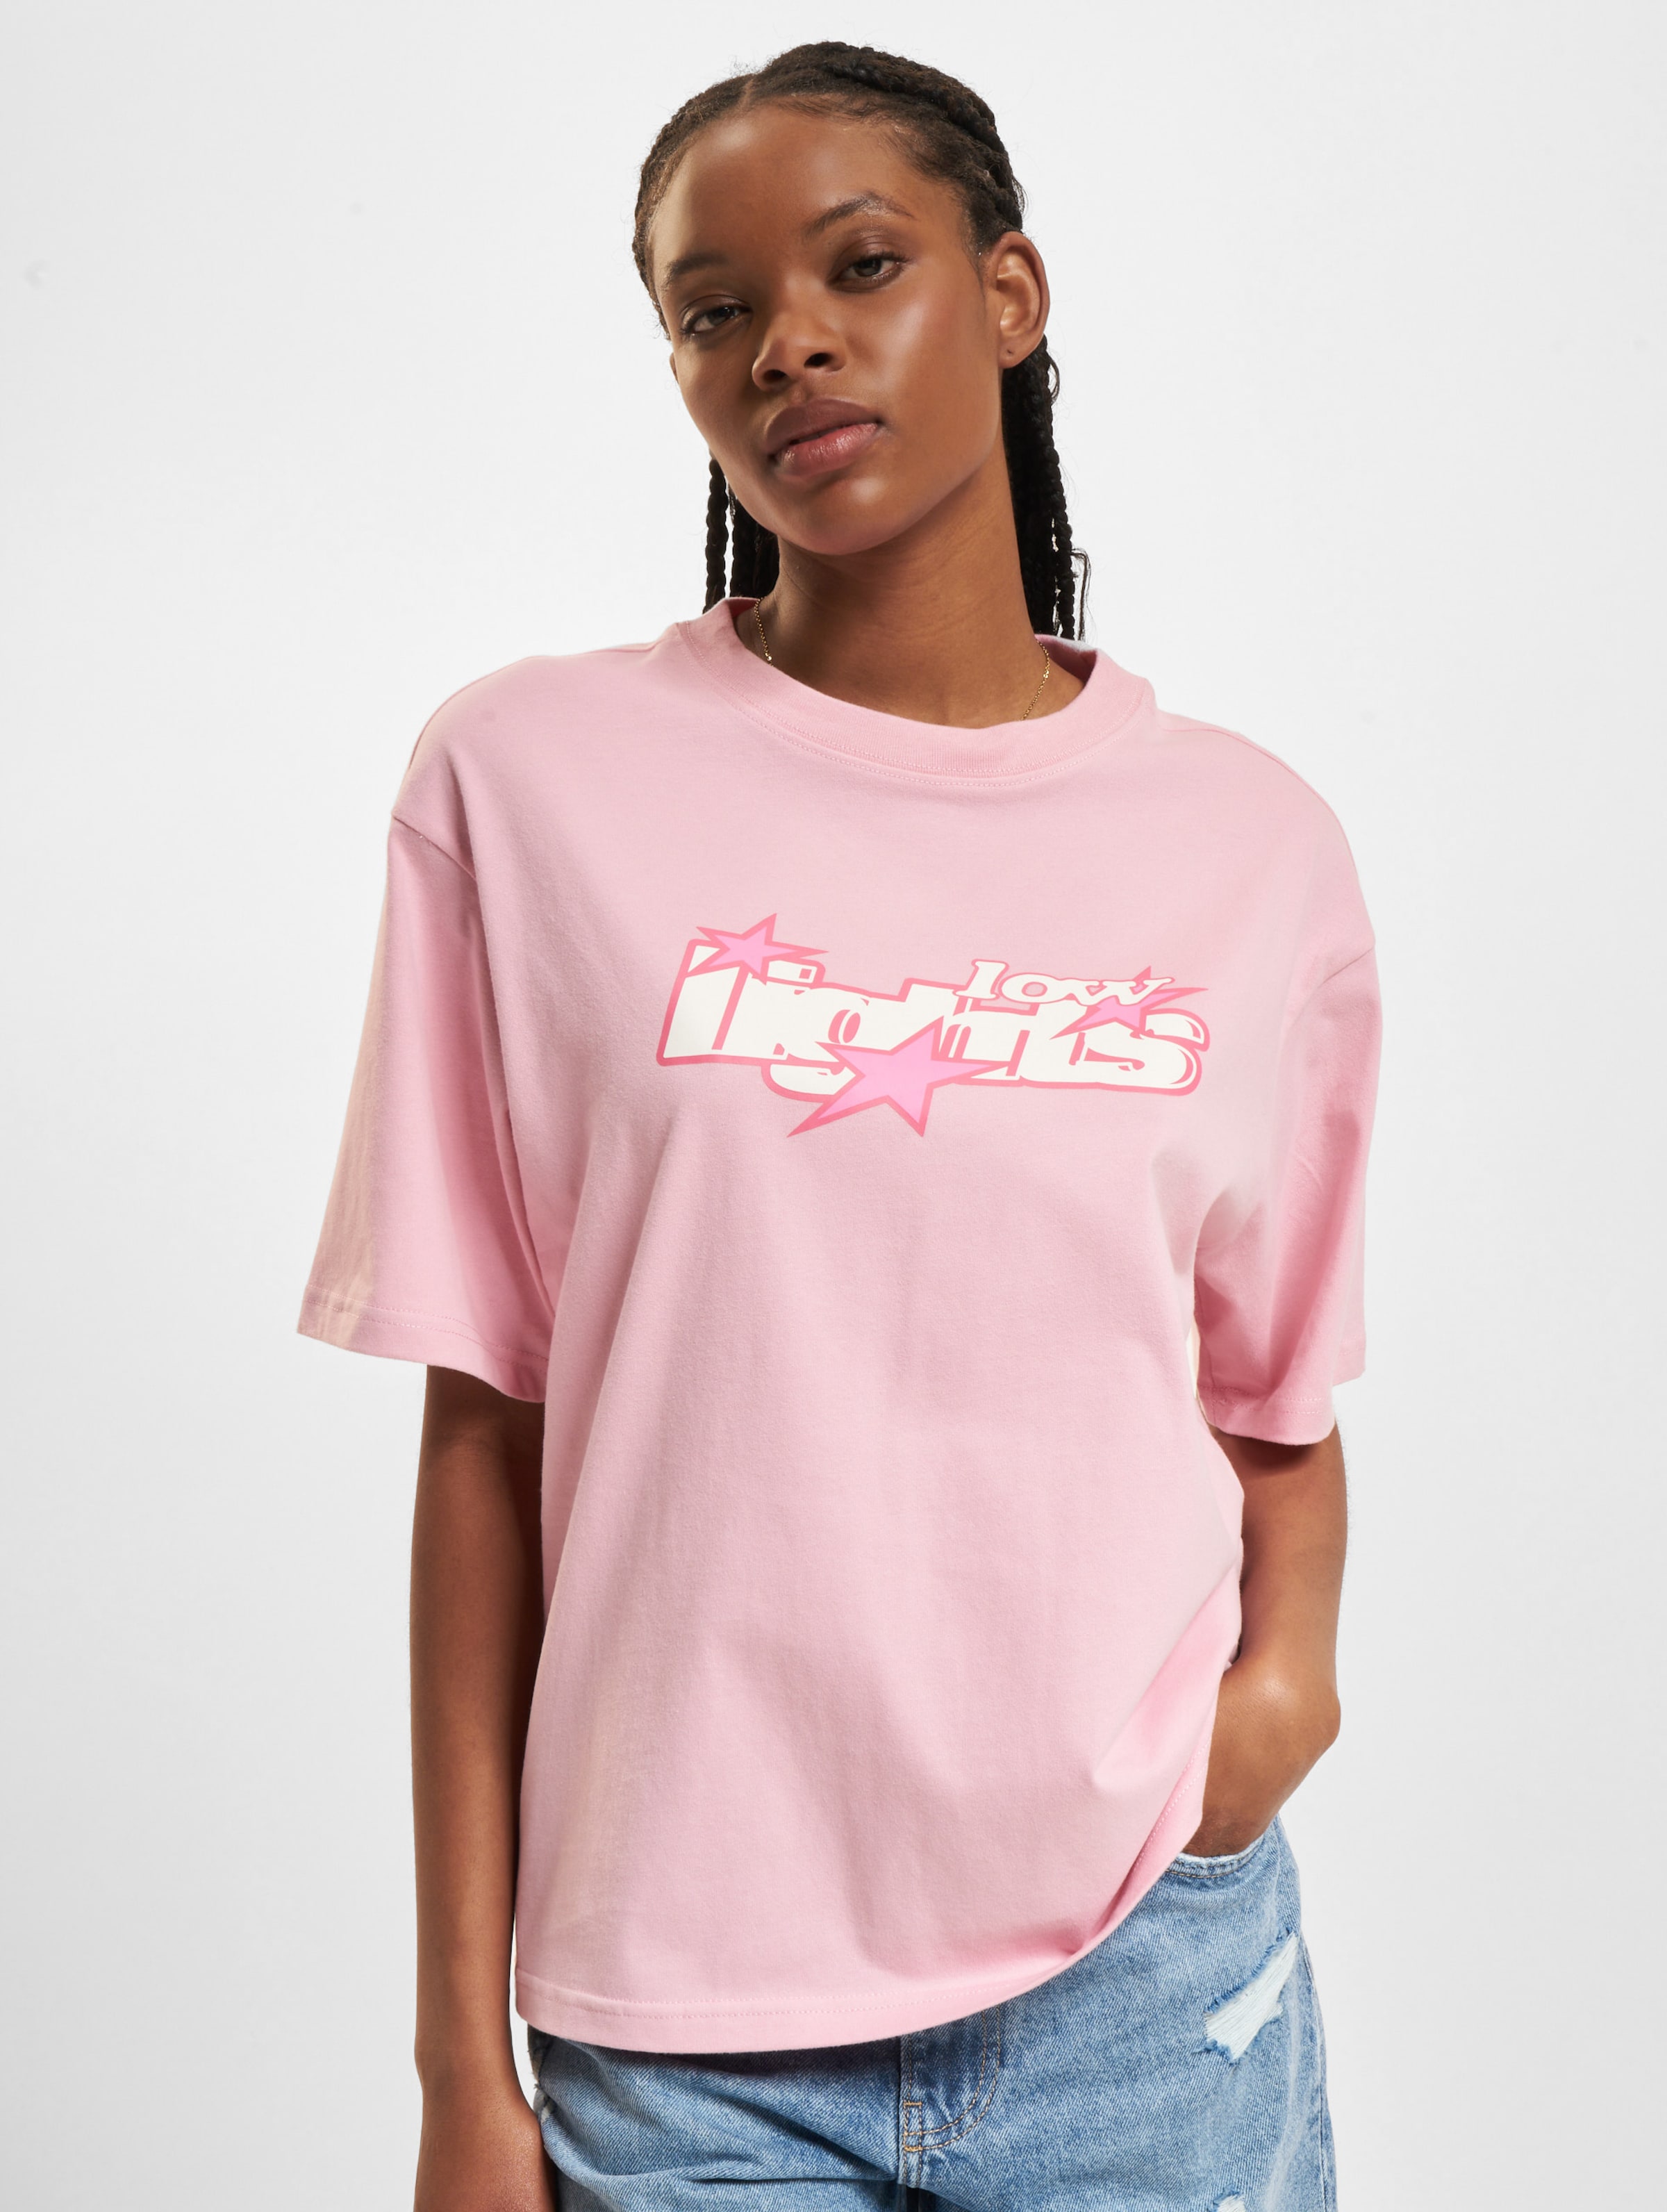 Low Lights Studios Lucky 7 Woman T-Shirt Frauen,Unisex op kleur roze, Maat L